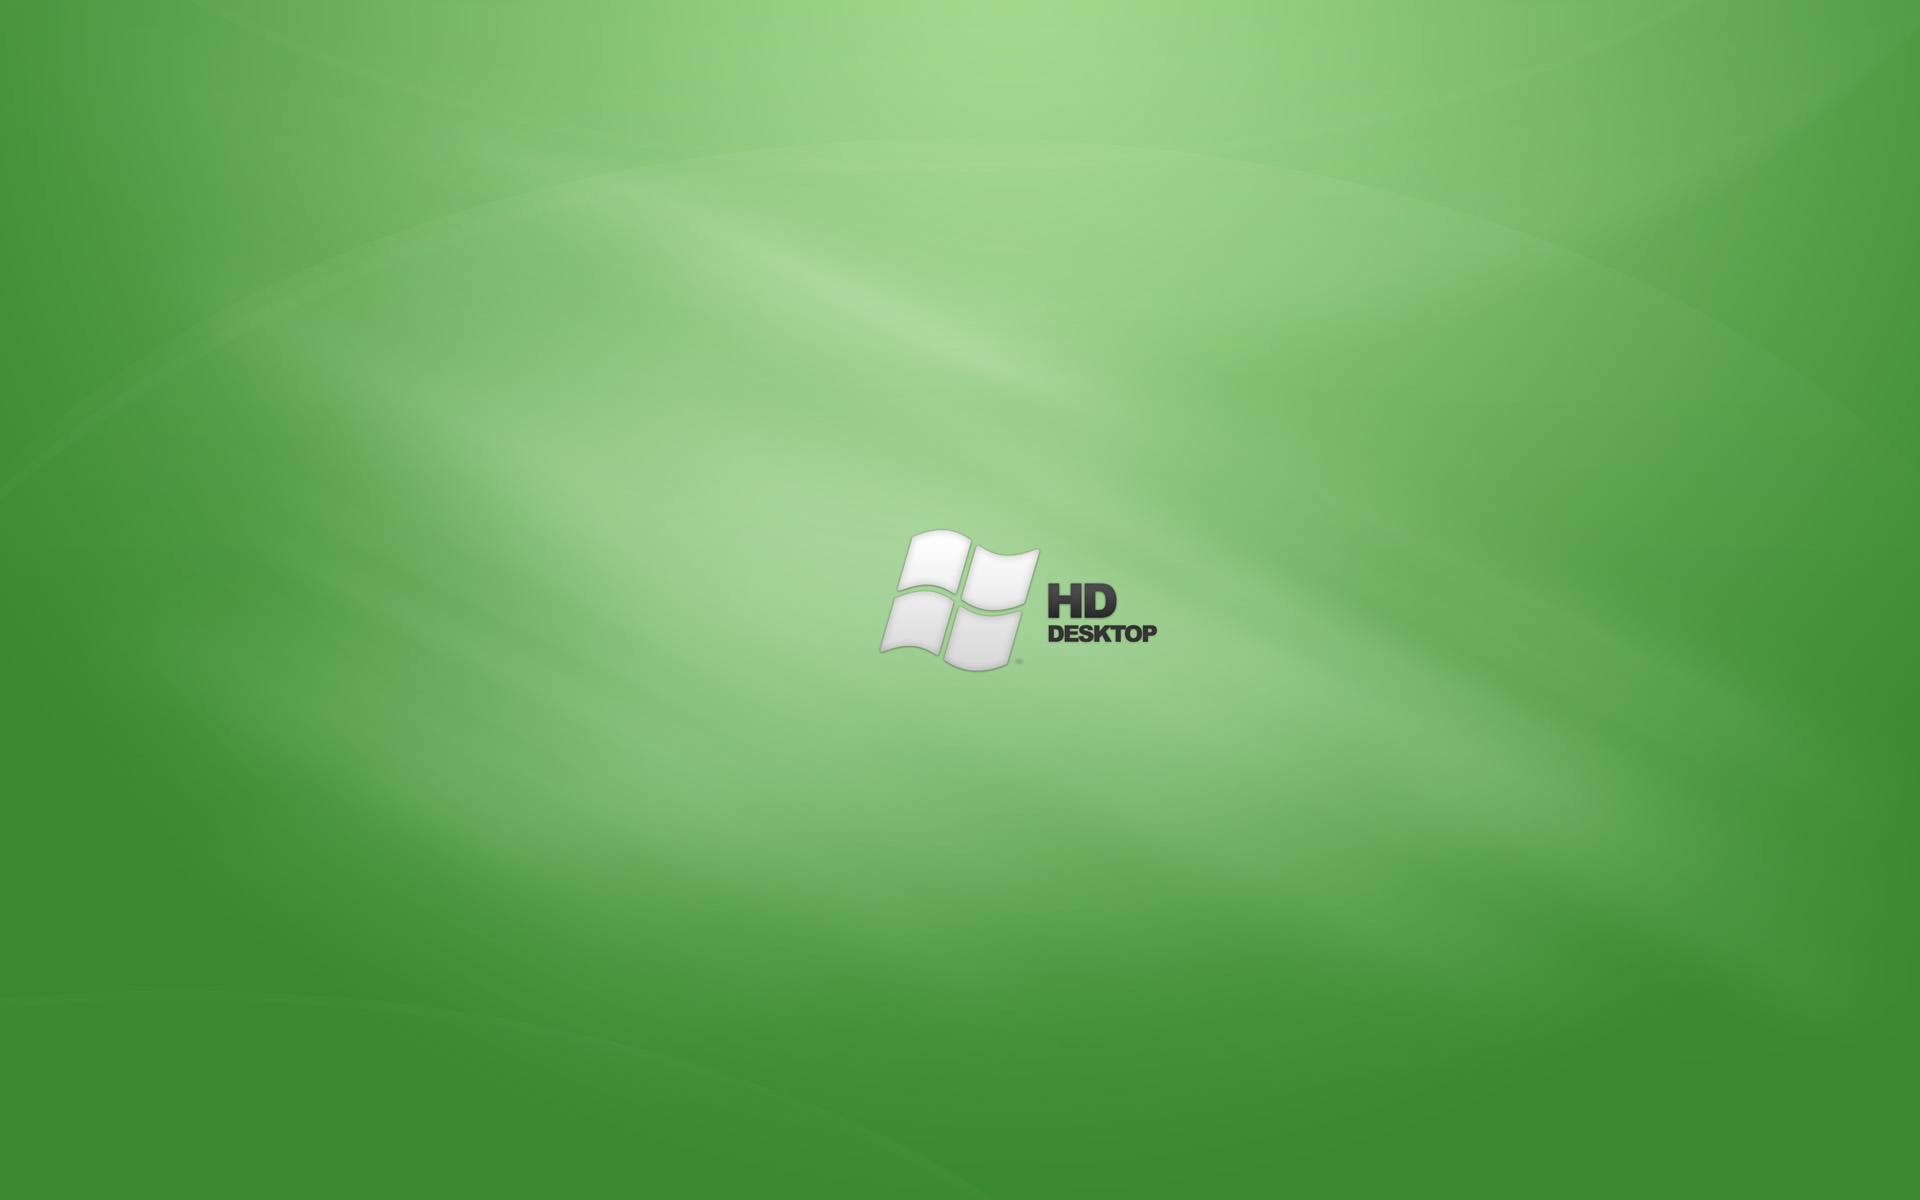 Windows Vista HD Desktop Wallpaper Geekpedia